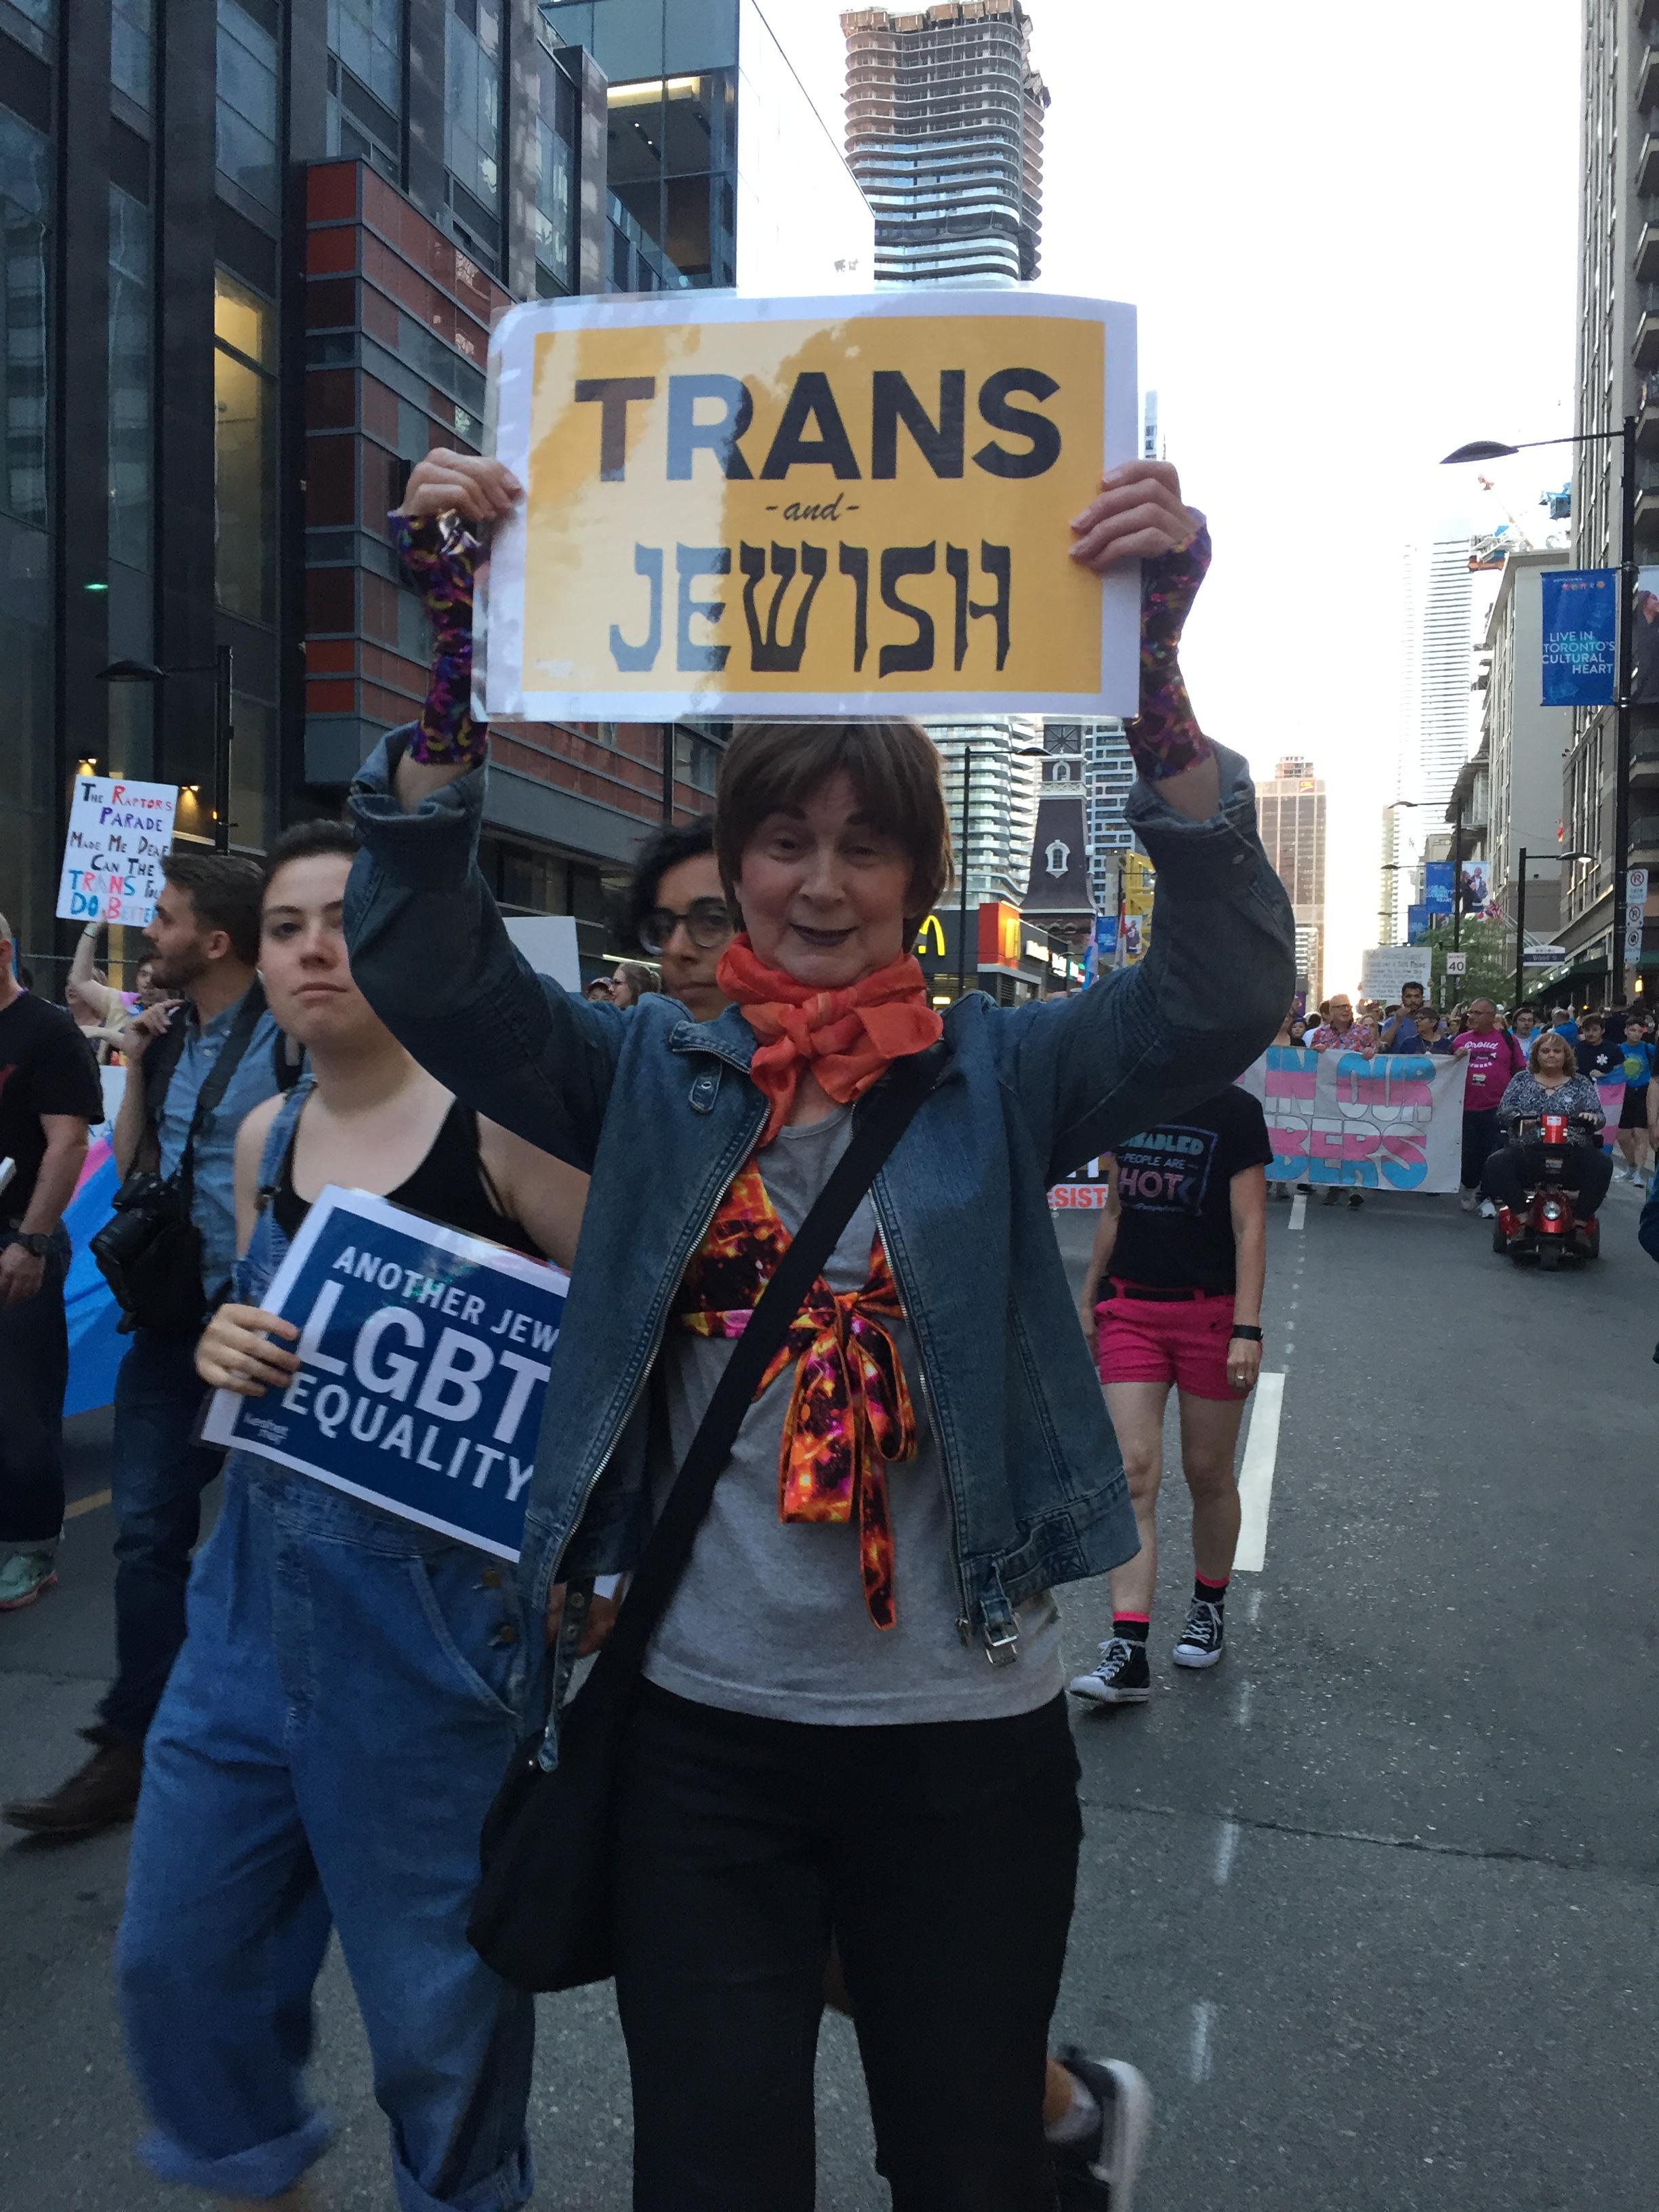 Trans and Jewish